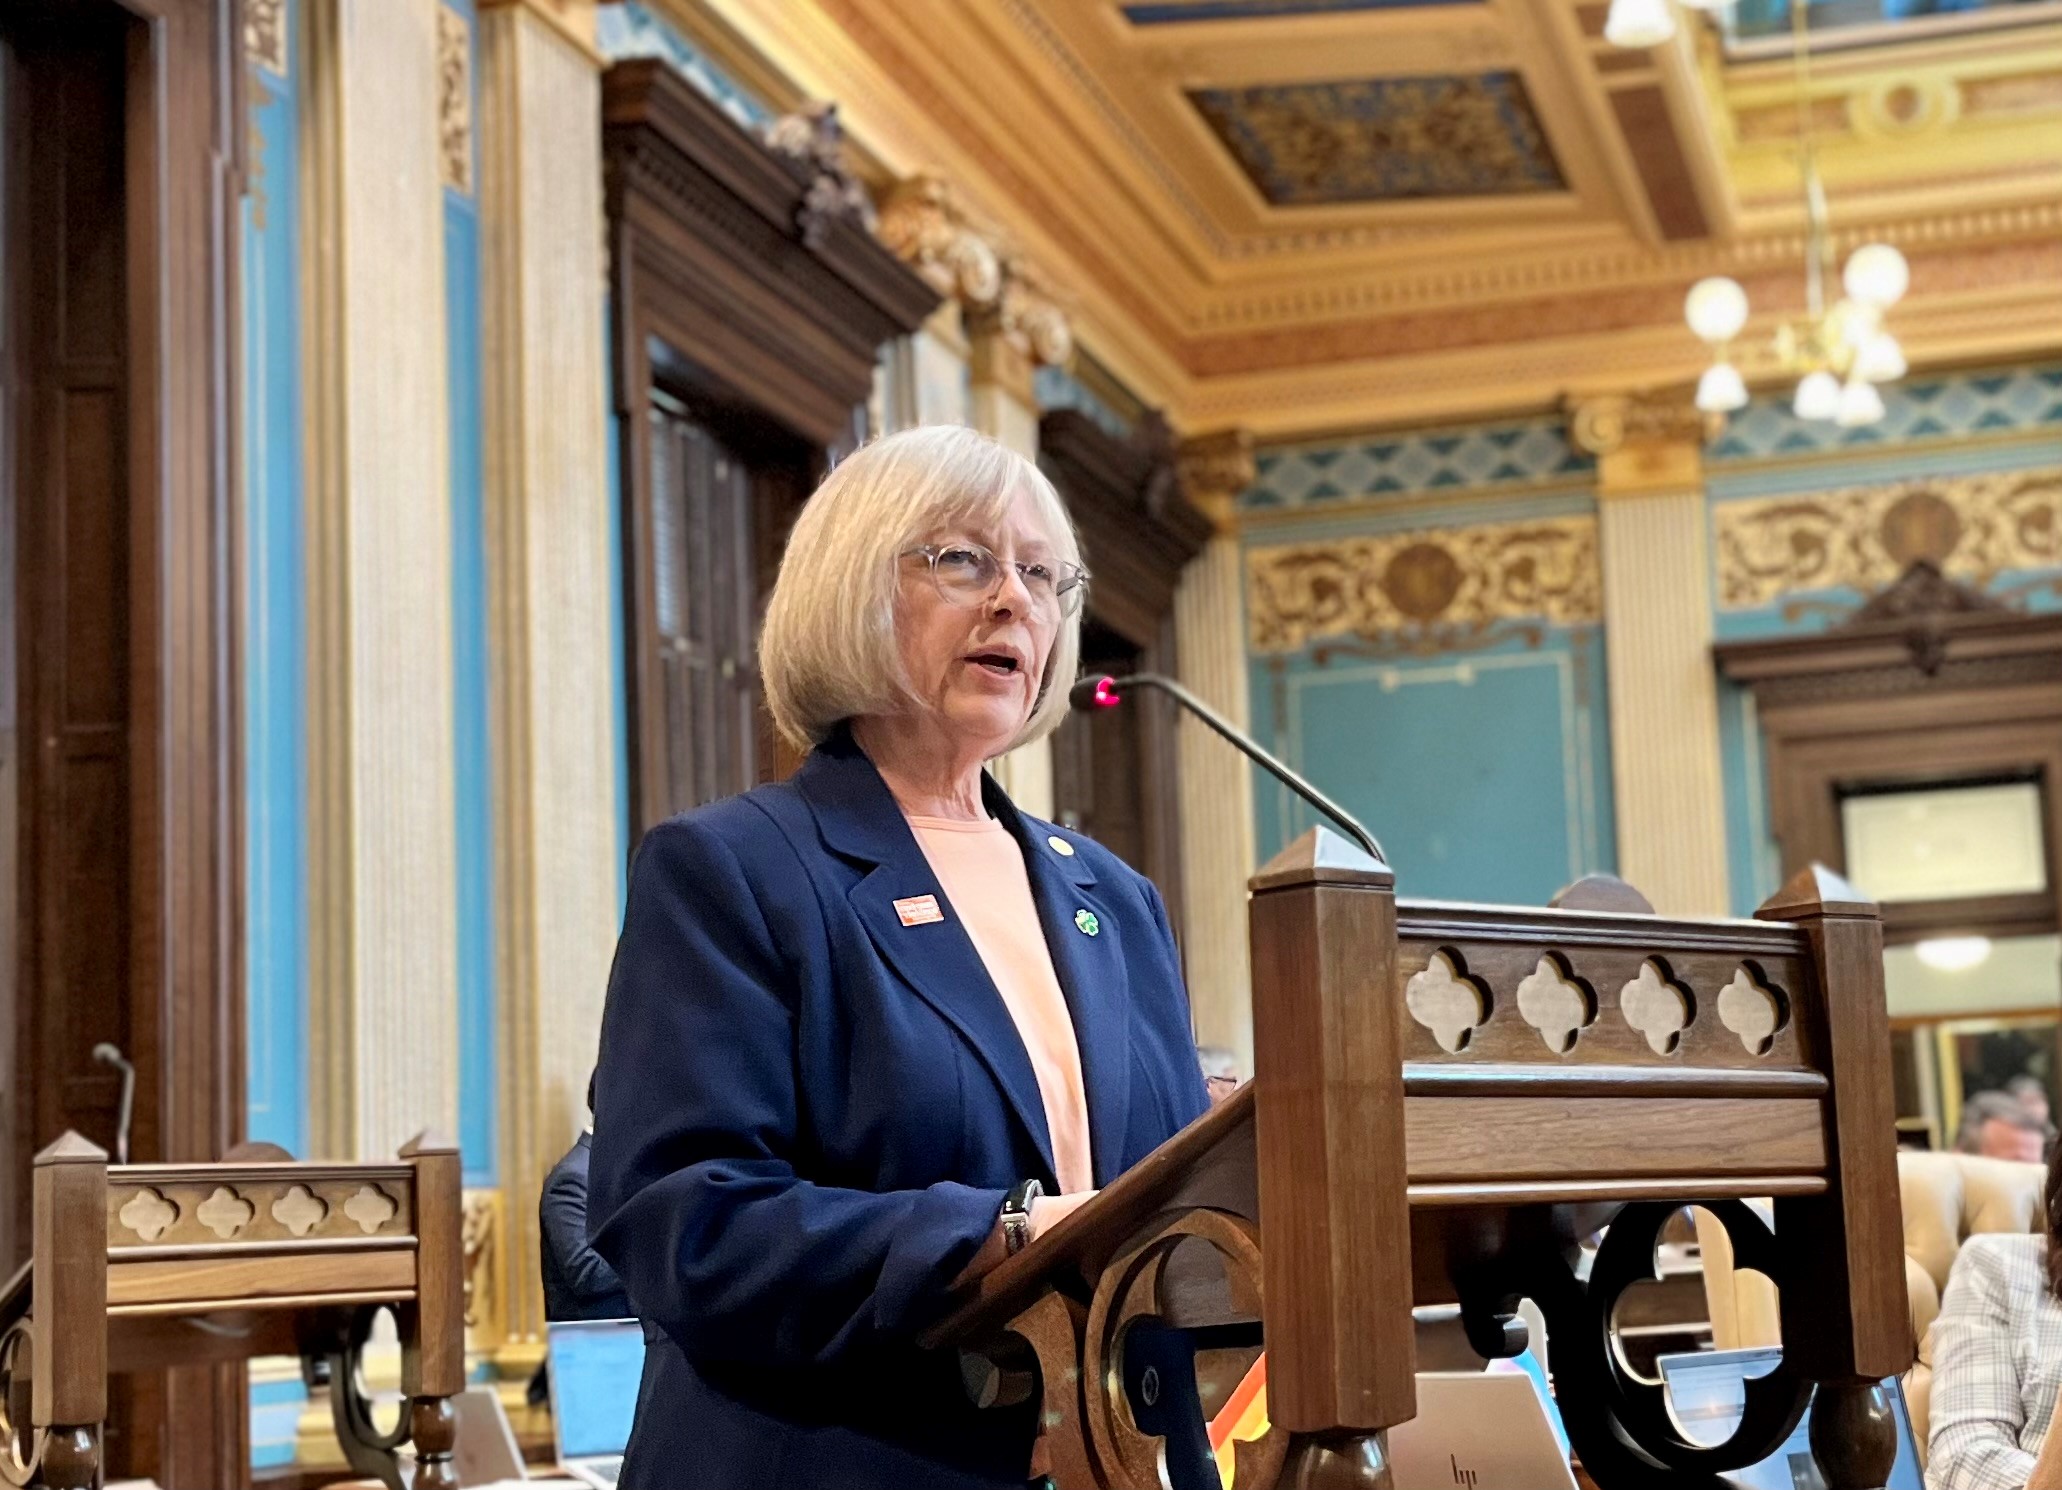 Red flag, universal background checks and safe storage bills pass Michigan  Senate 